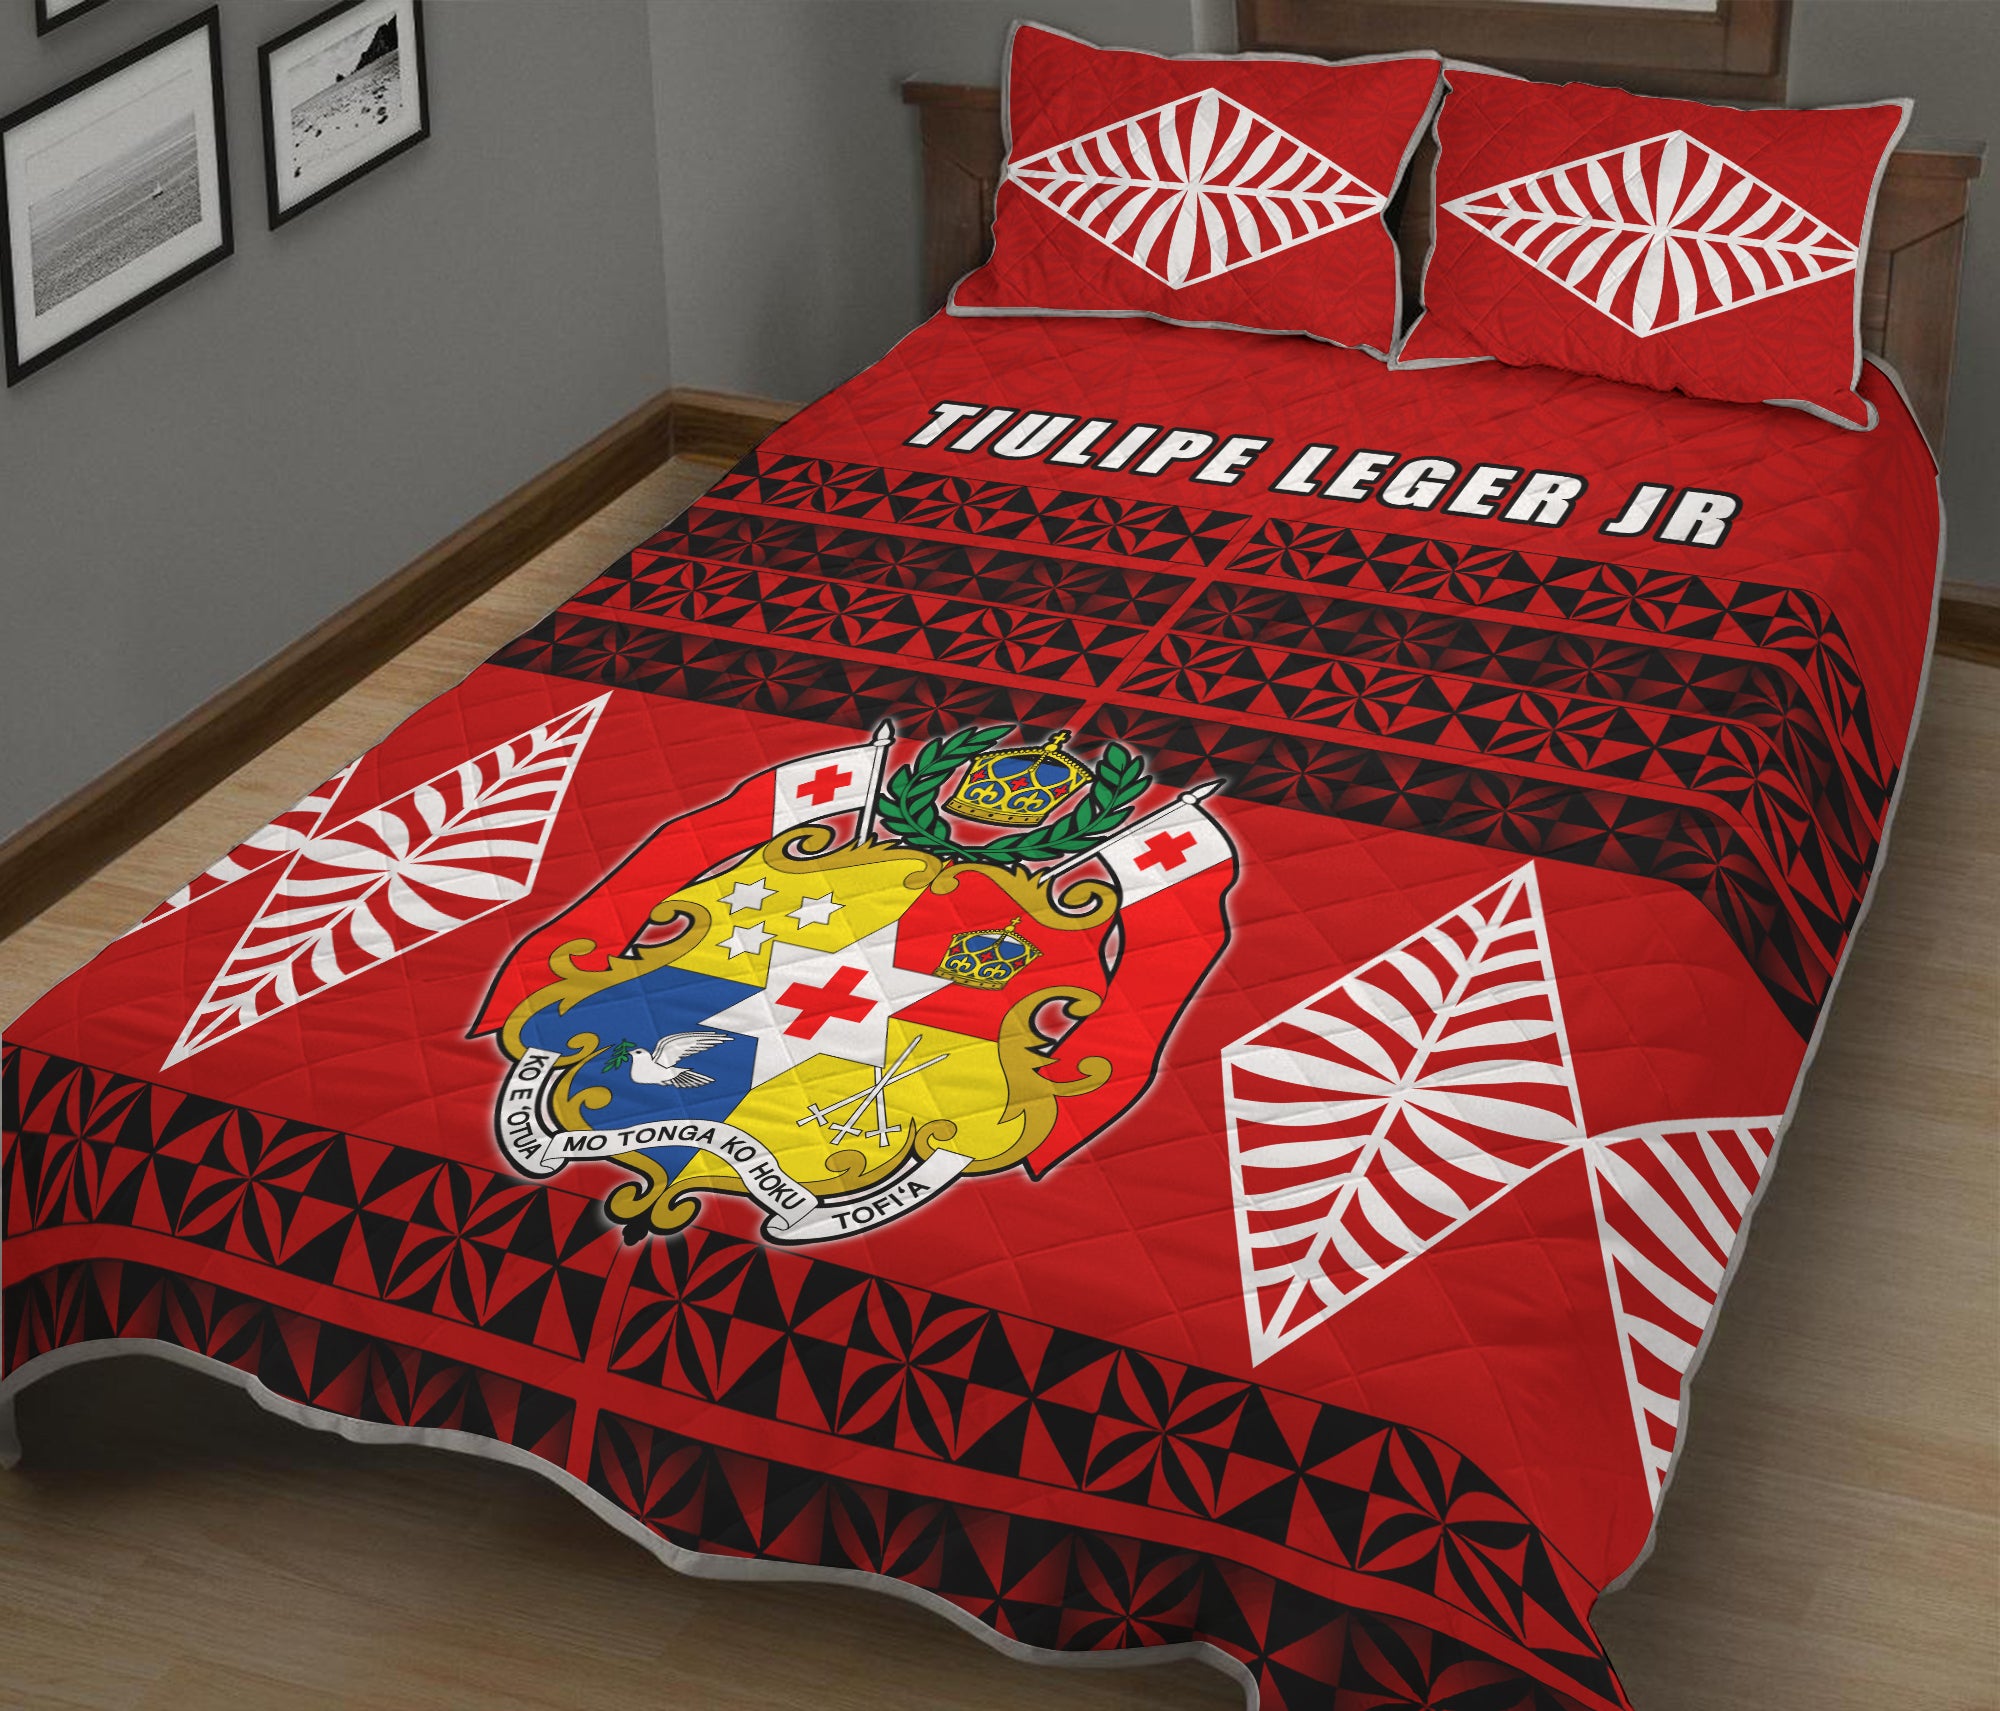 (TIULIPE LEGER JR) Tonga Quilt Bed Set - Tongan Pattern LT13 Red - Polynesian Pride